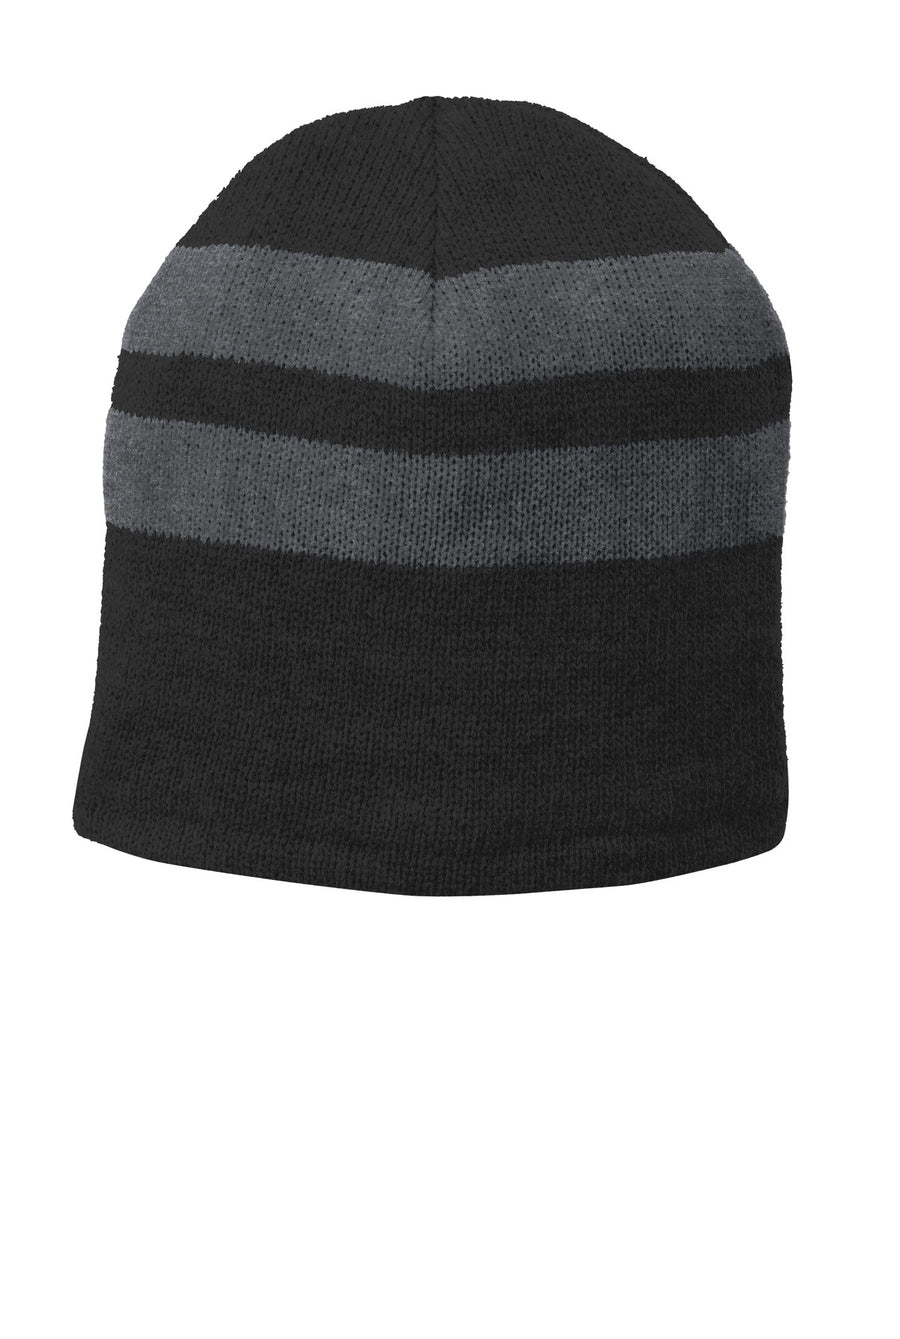 Port & Company Fleece-Lined Striped Beanie Cap.